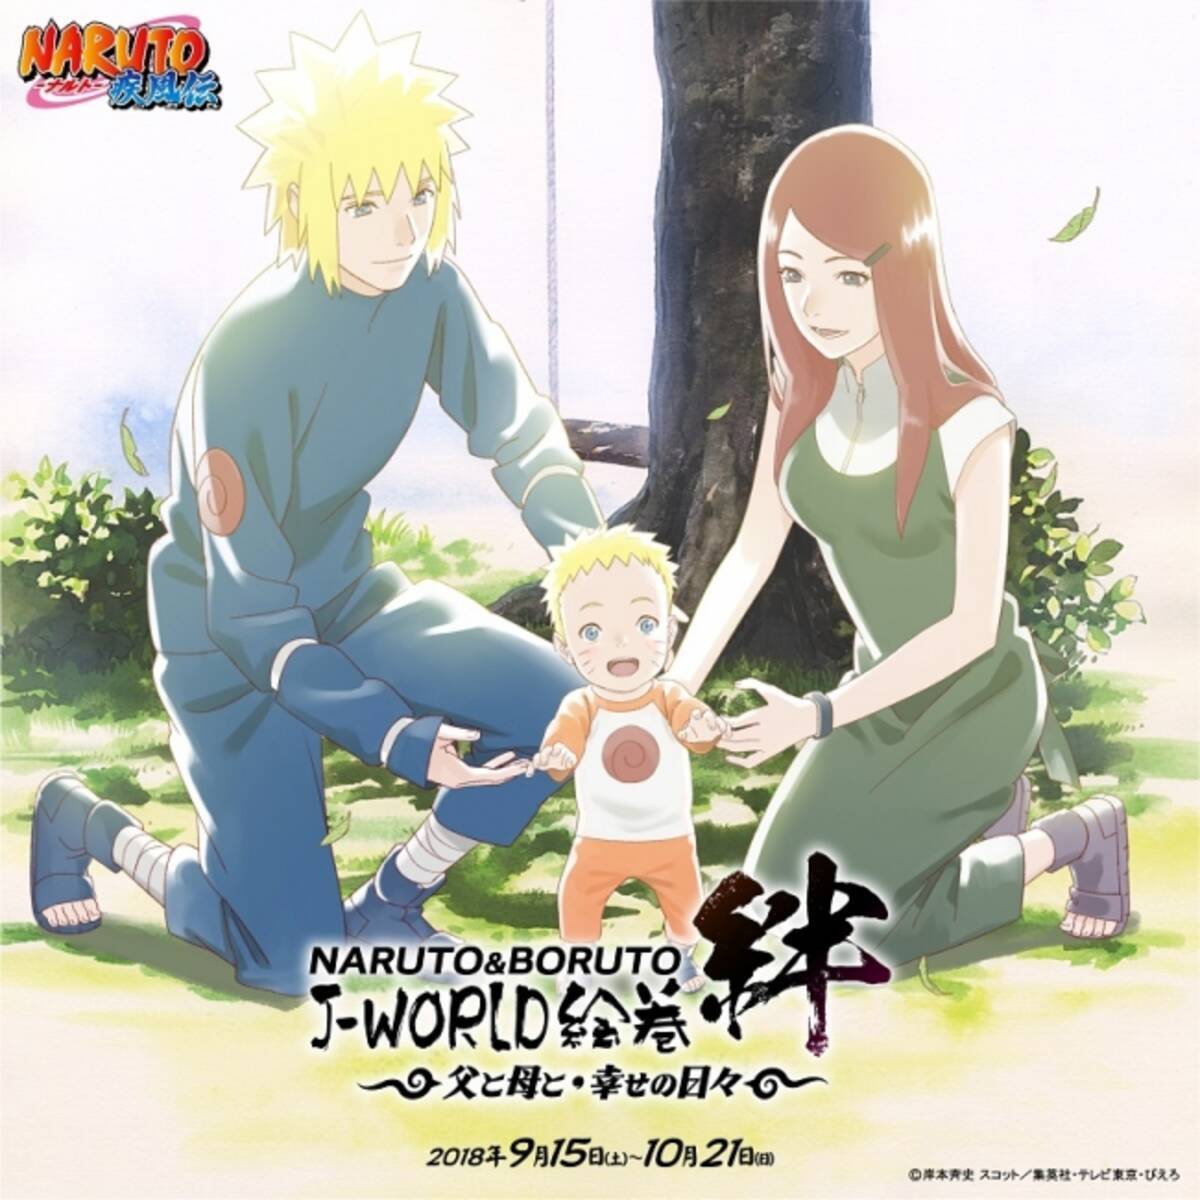 Naruto Boruto J World絵巻 絆 父と母と 幸せの日々 18年9月15日 土 10月21日 日 18年9月4日 エキサイトニュース